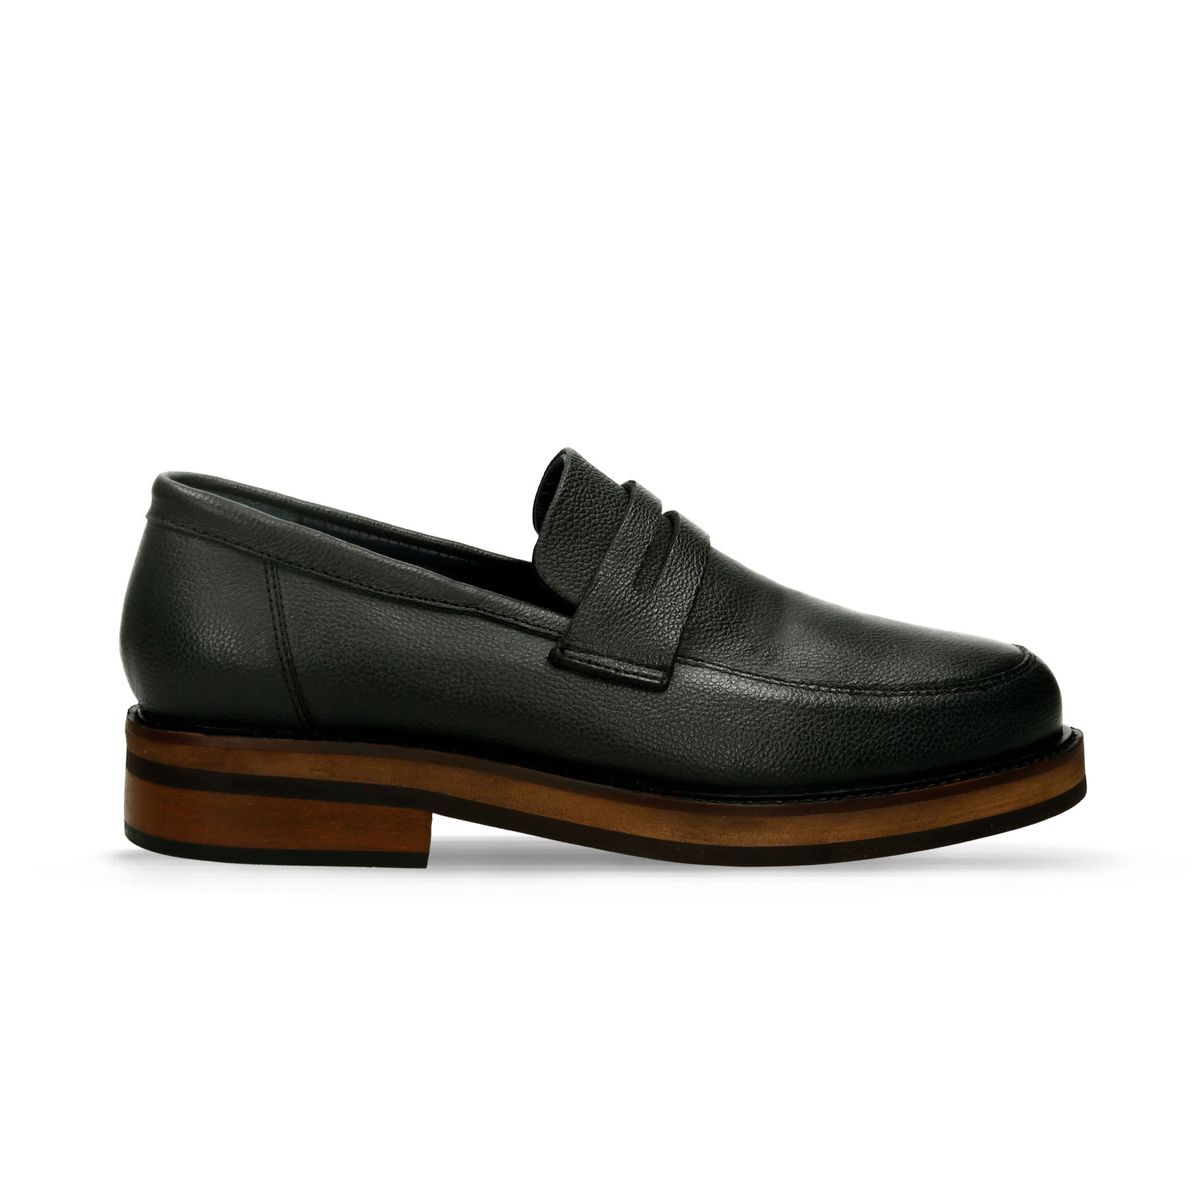 Zapatos Formales Negro Bata Felixiano Moc Hombre